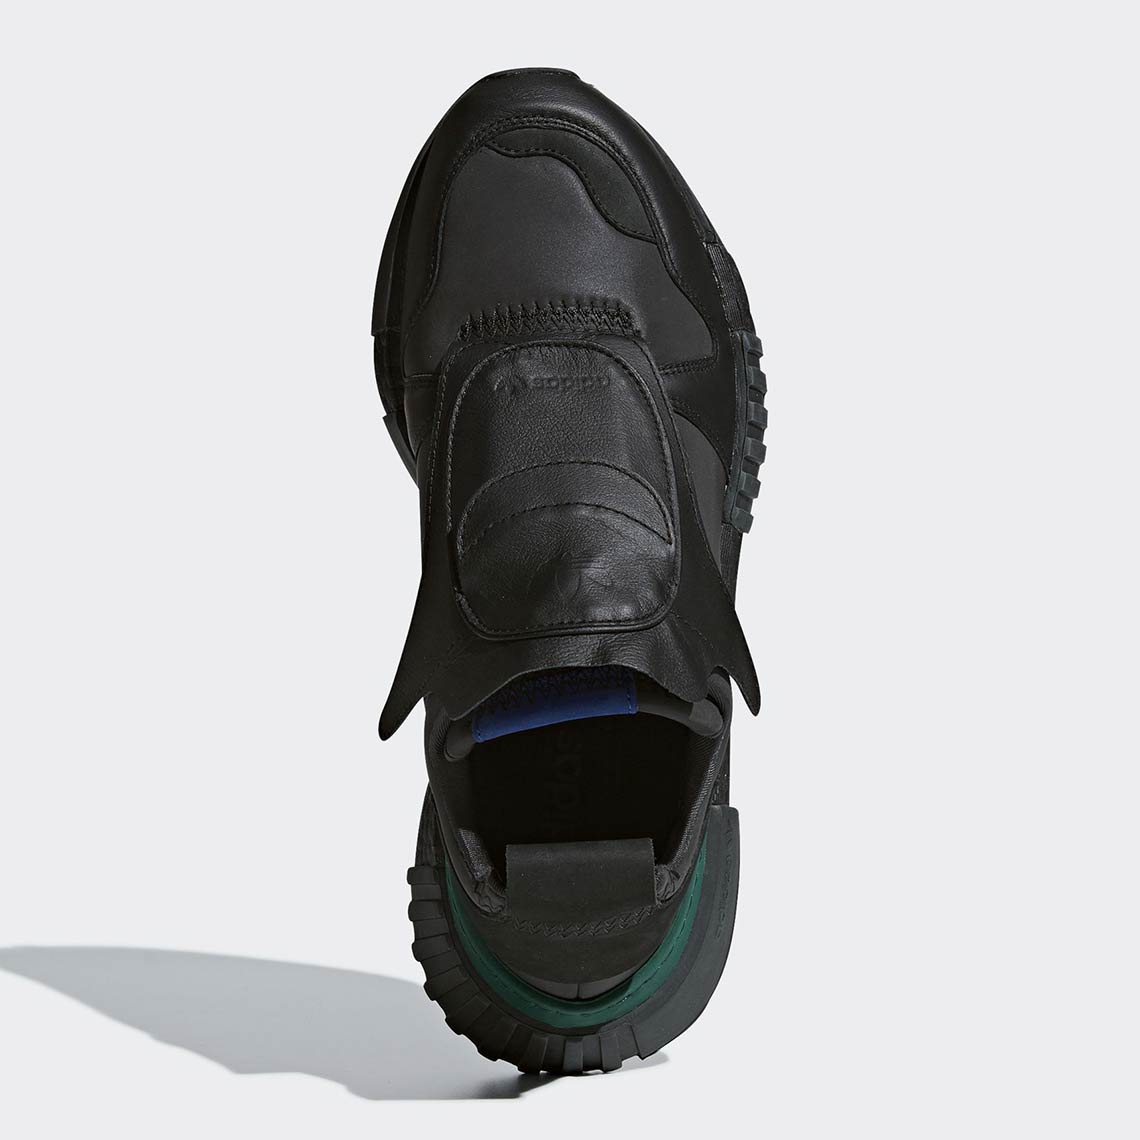 adidas Futurepacer Black B37266 Release Info | SneakerNews.com